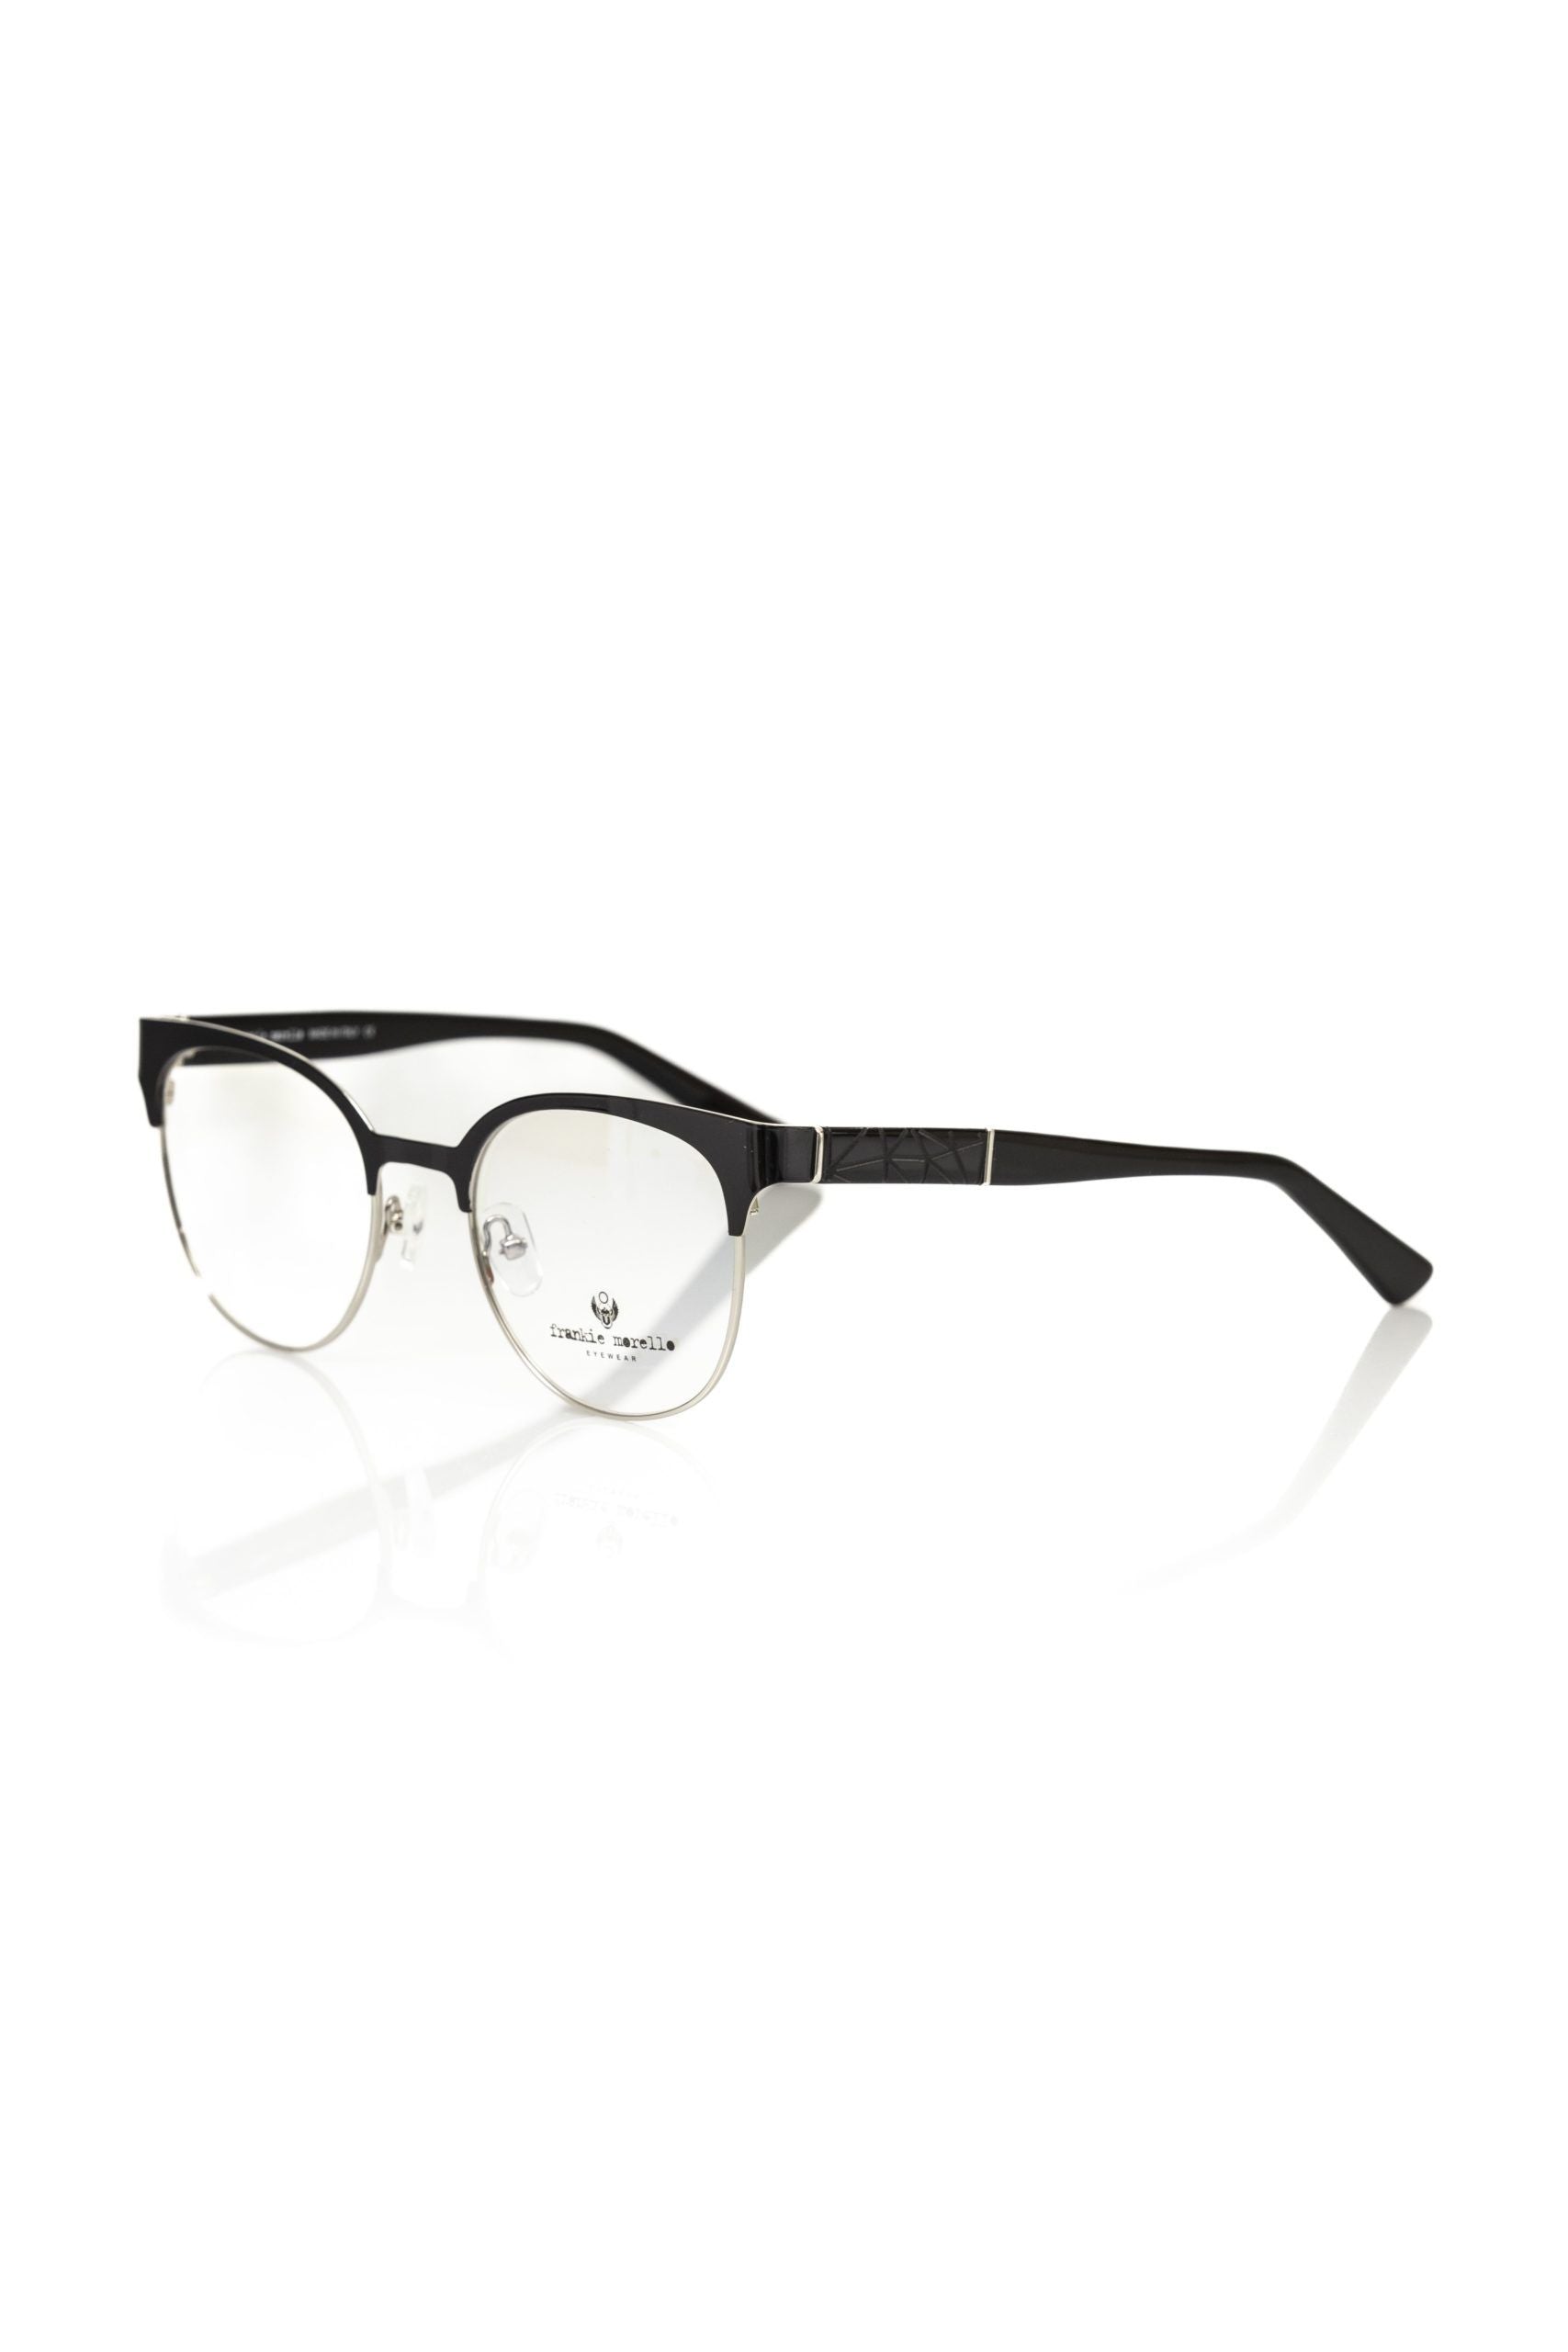 Frankie Morello Chic Geometric Black Clubmaster Eyeglasses